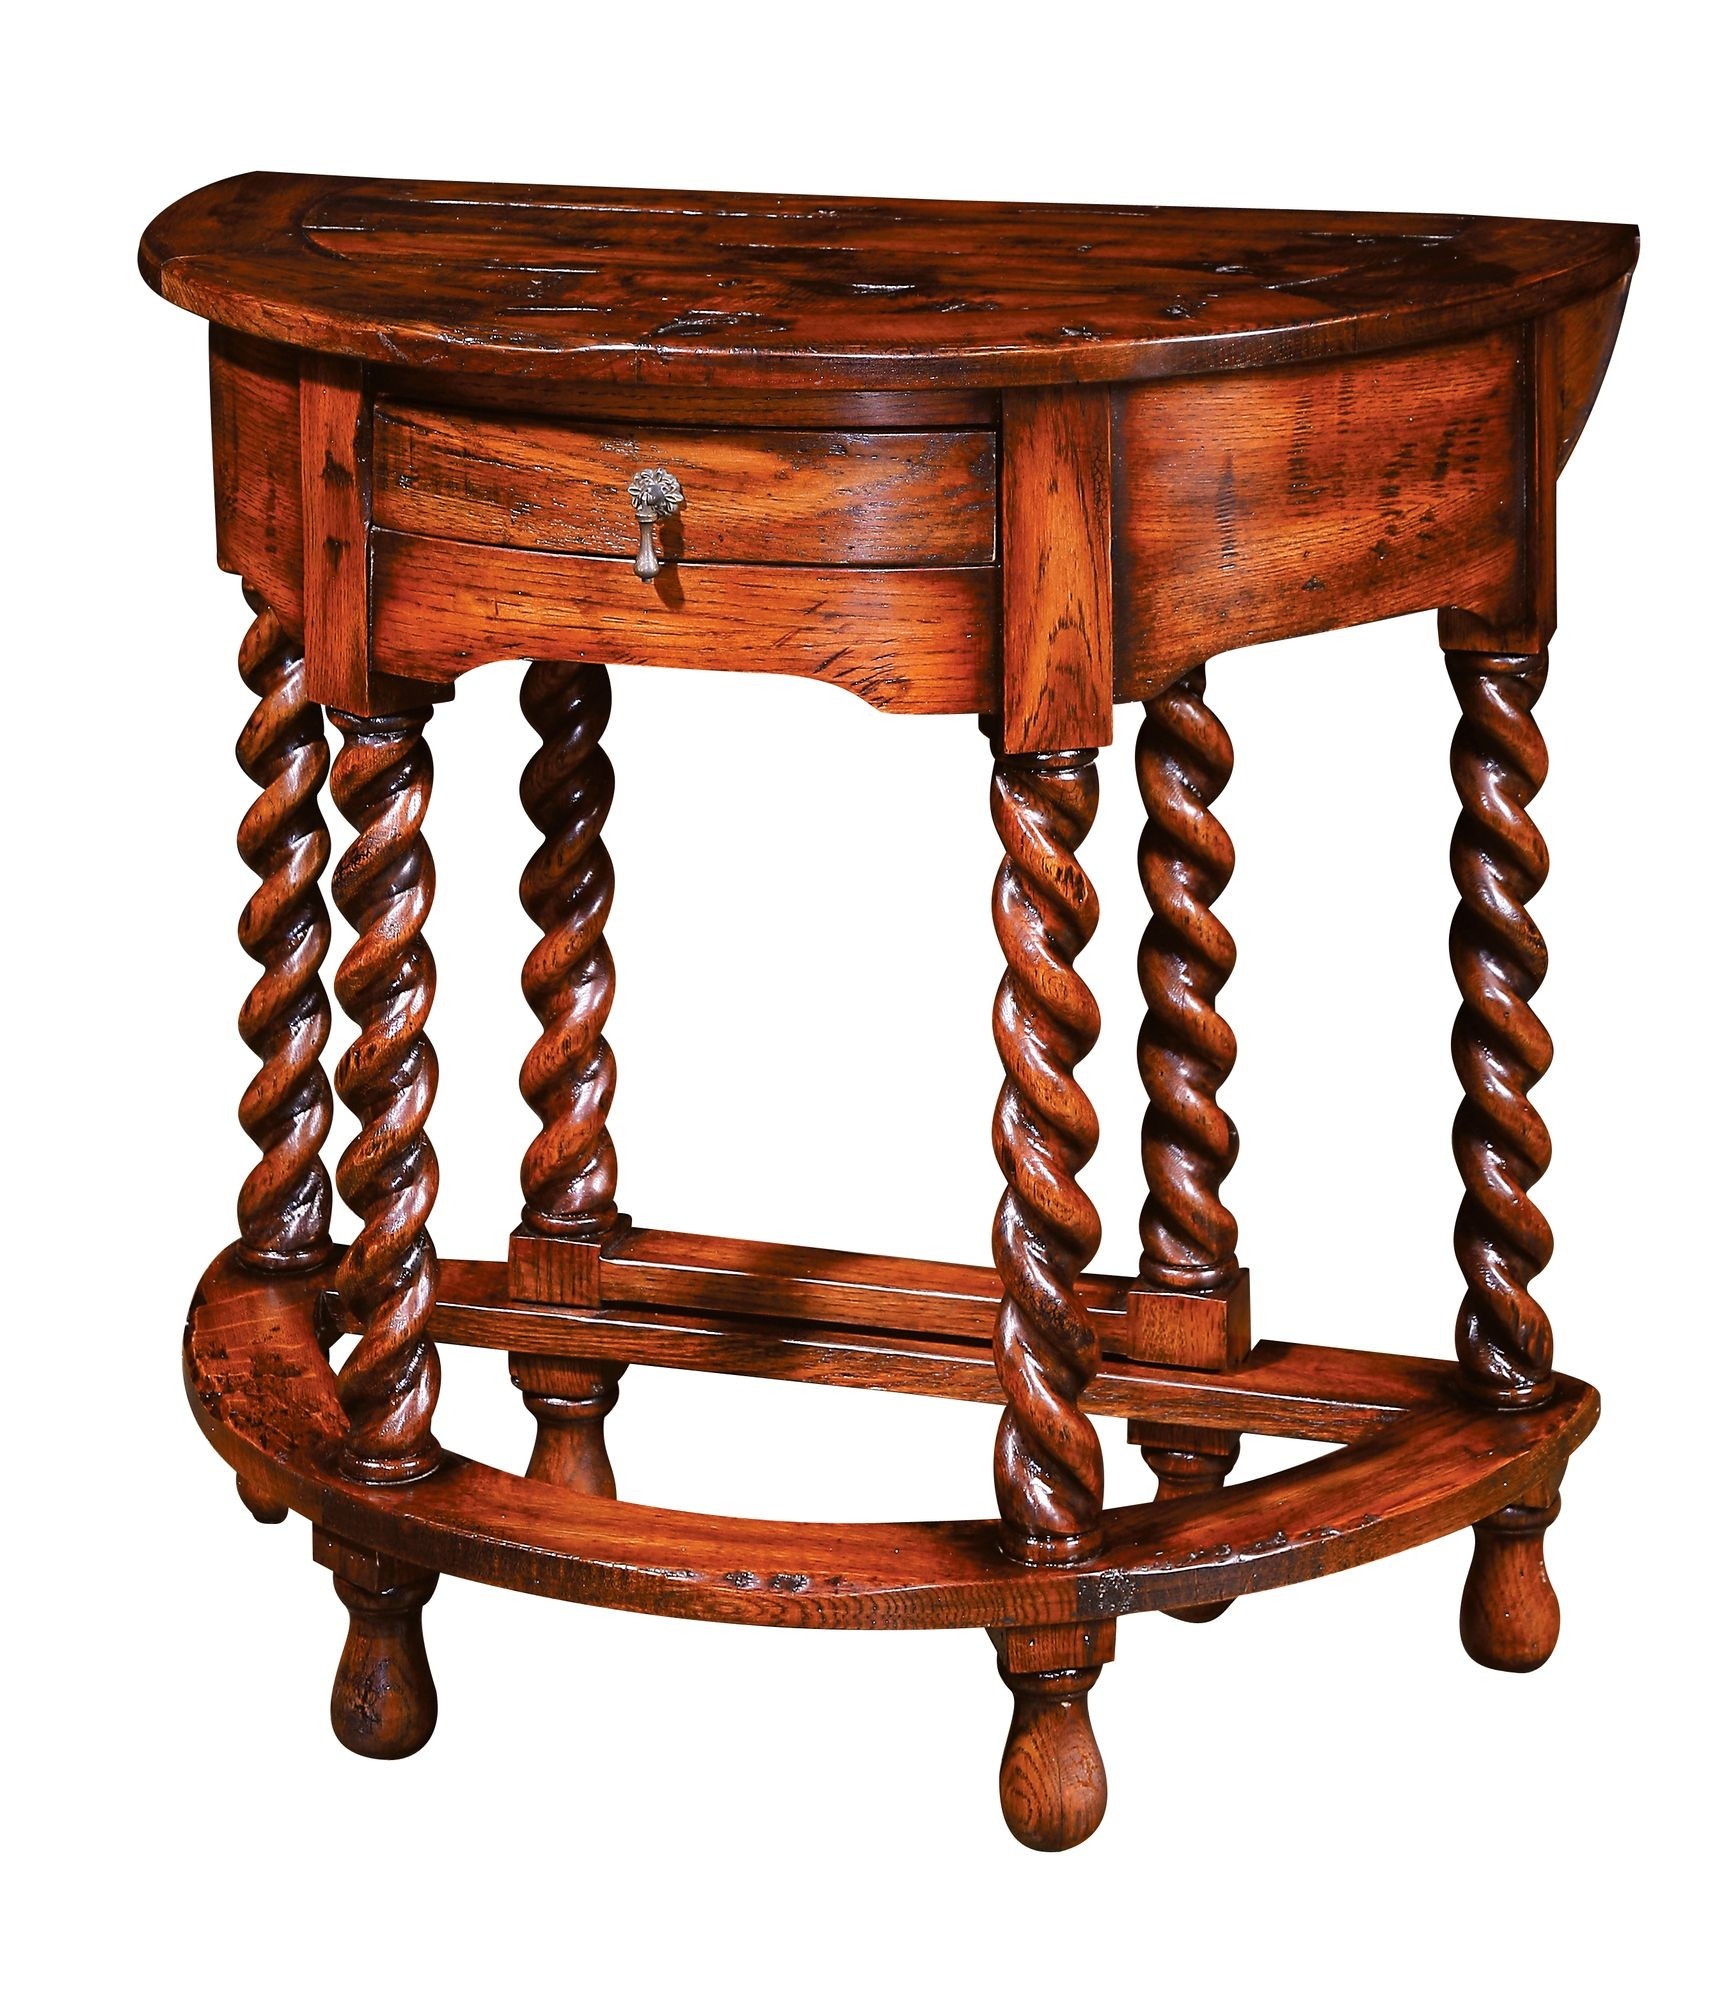 Furniture classics ltd gateleg rope twist end table